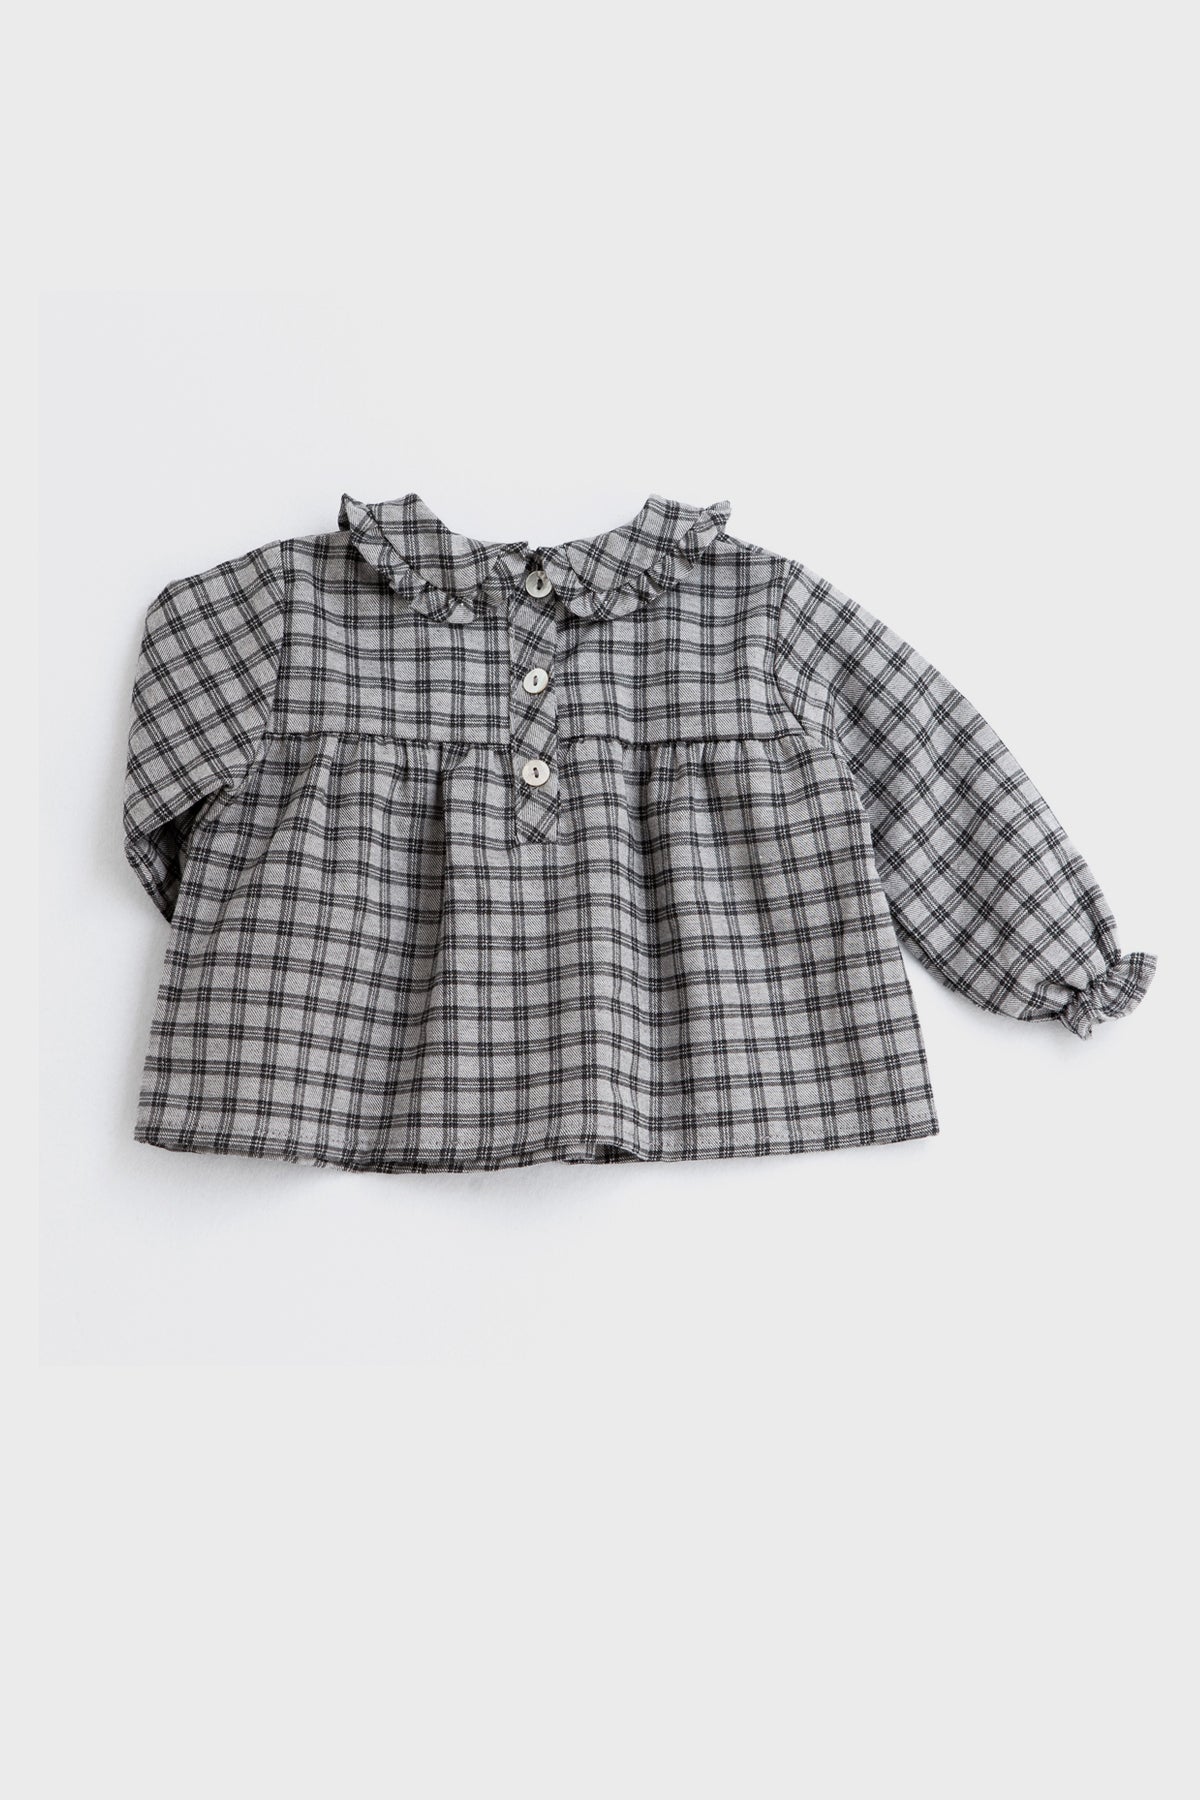 Tocoto Vintage Baby Girls Checkered Shirt – Mini Ruby